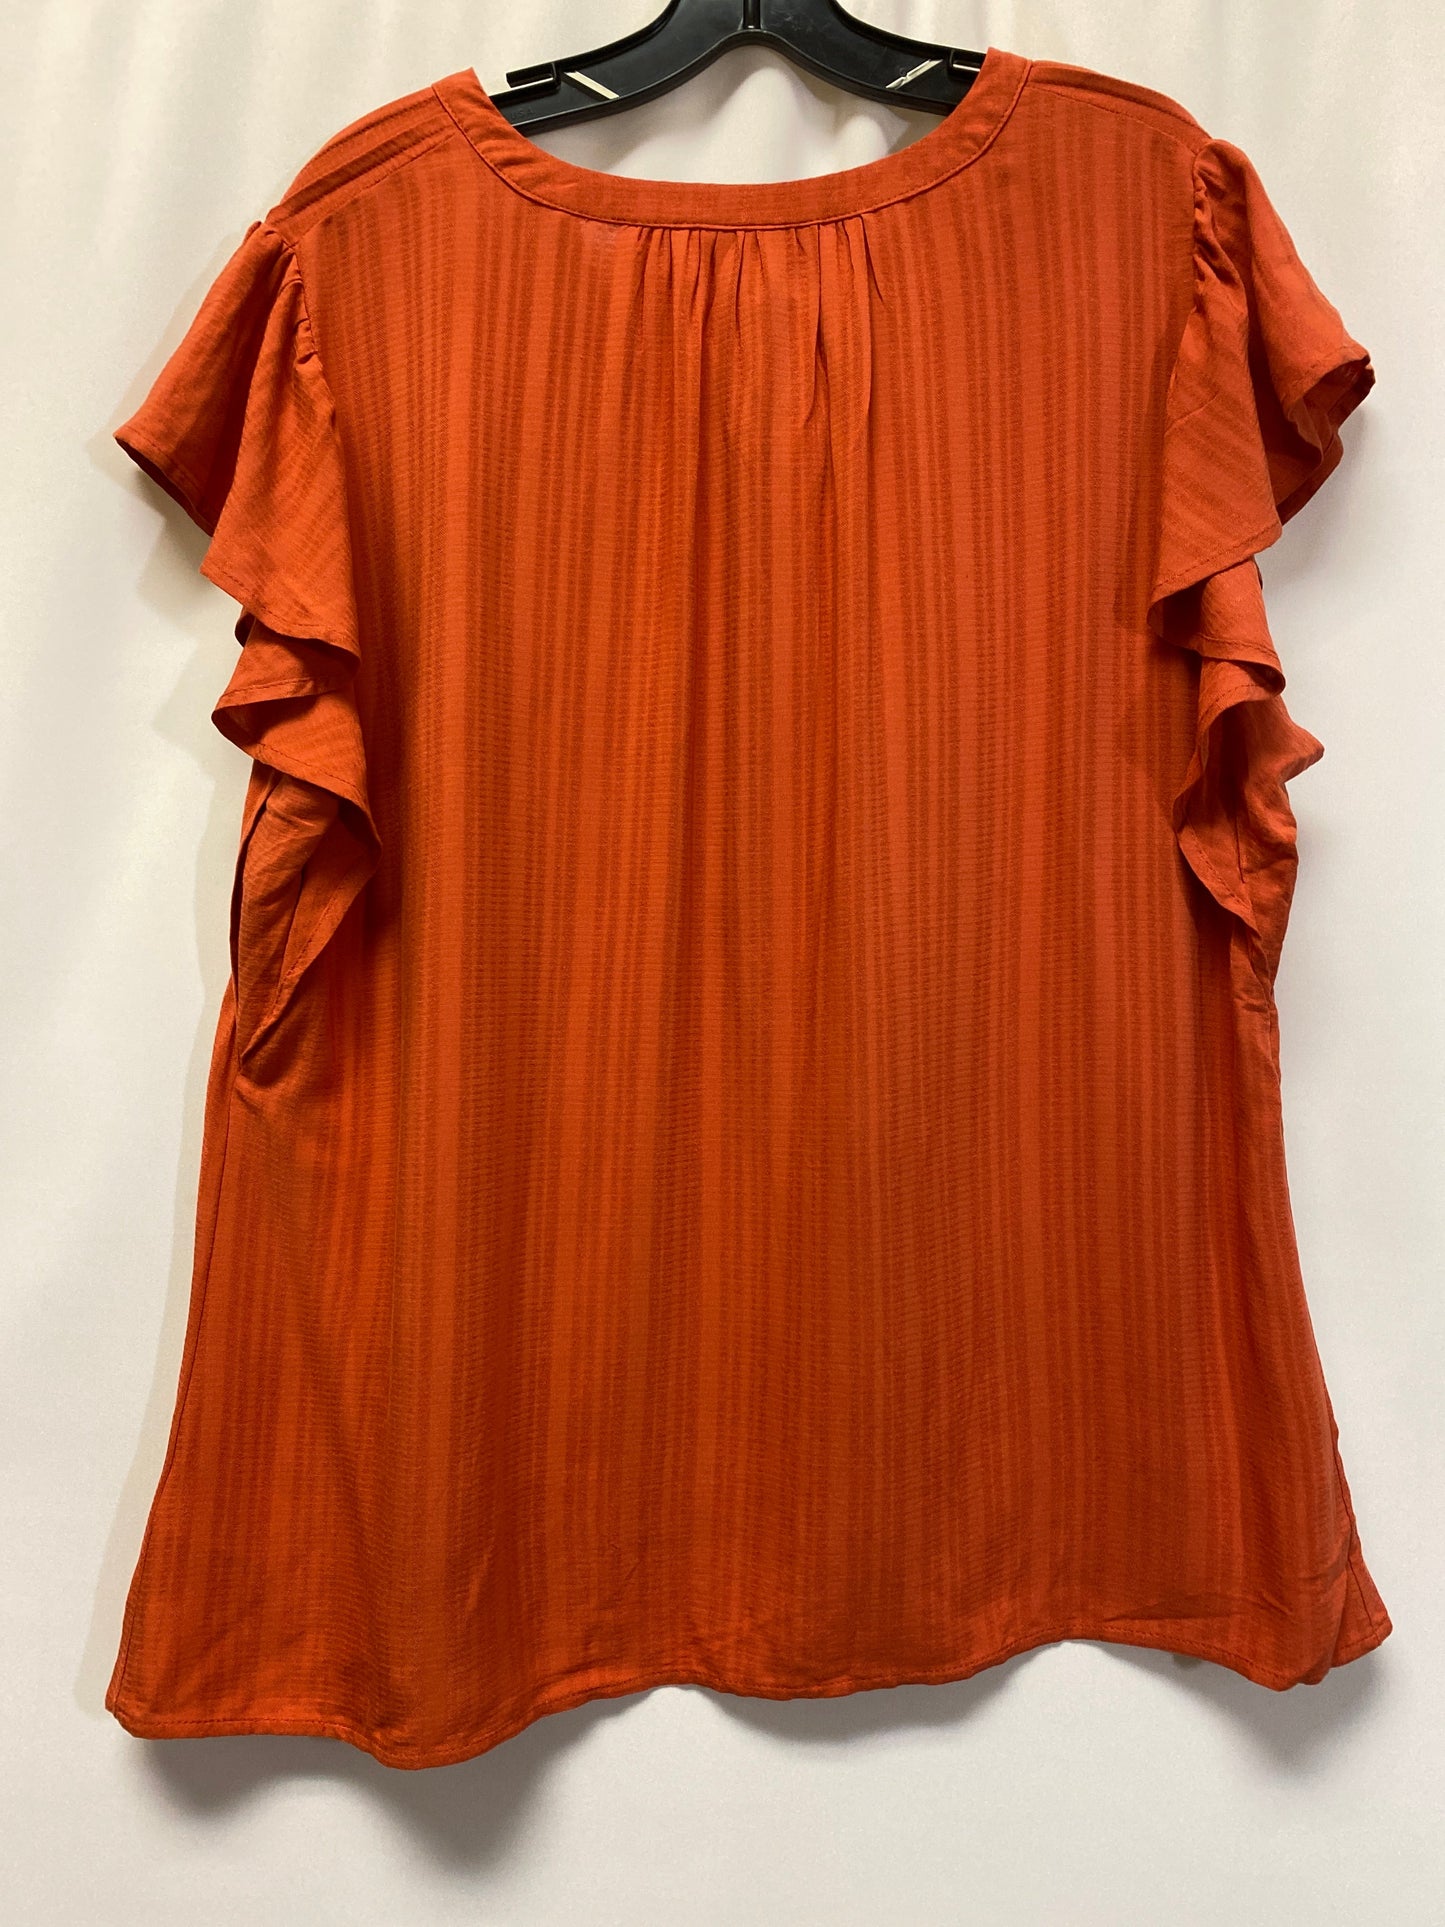 Orange Top Short Sleeve Knox Rose, Size Xl